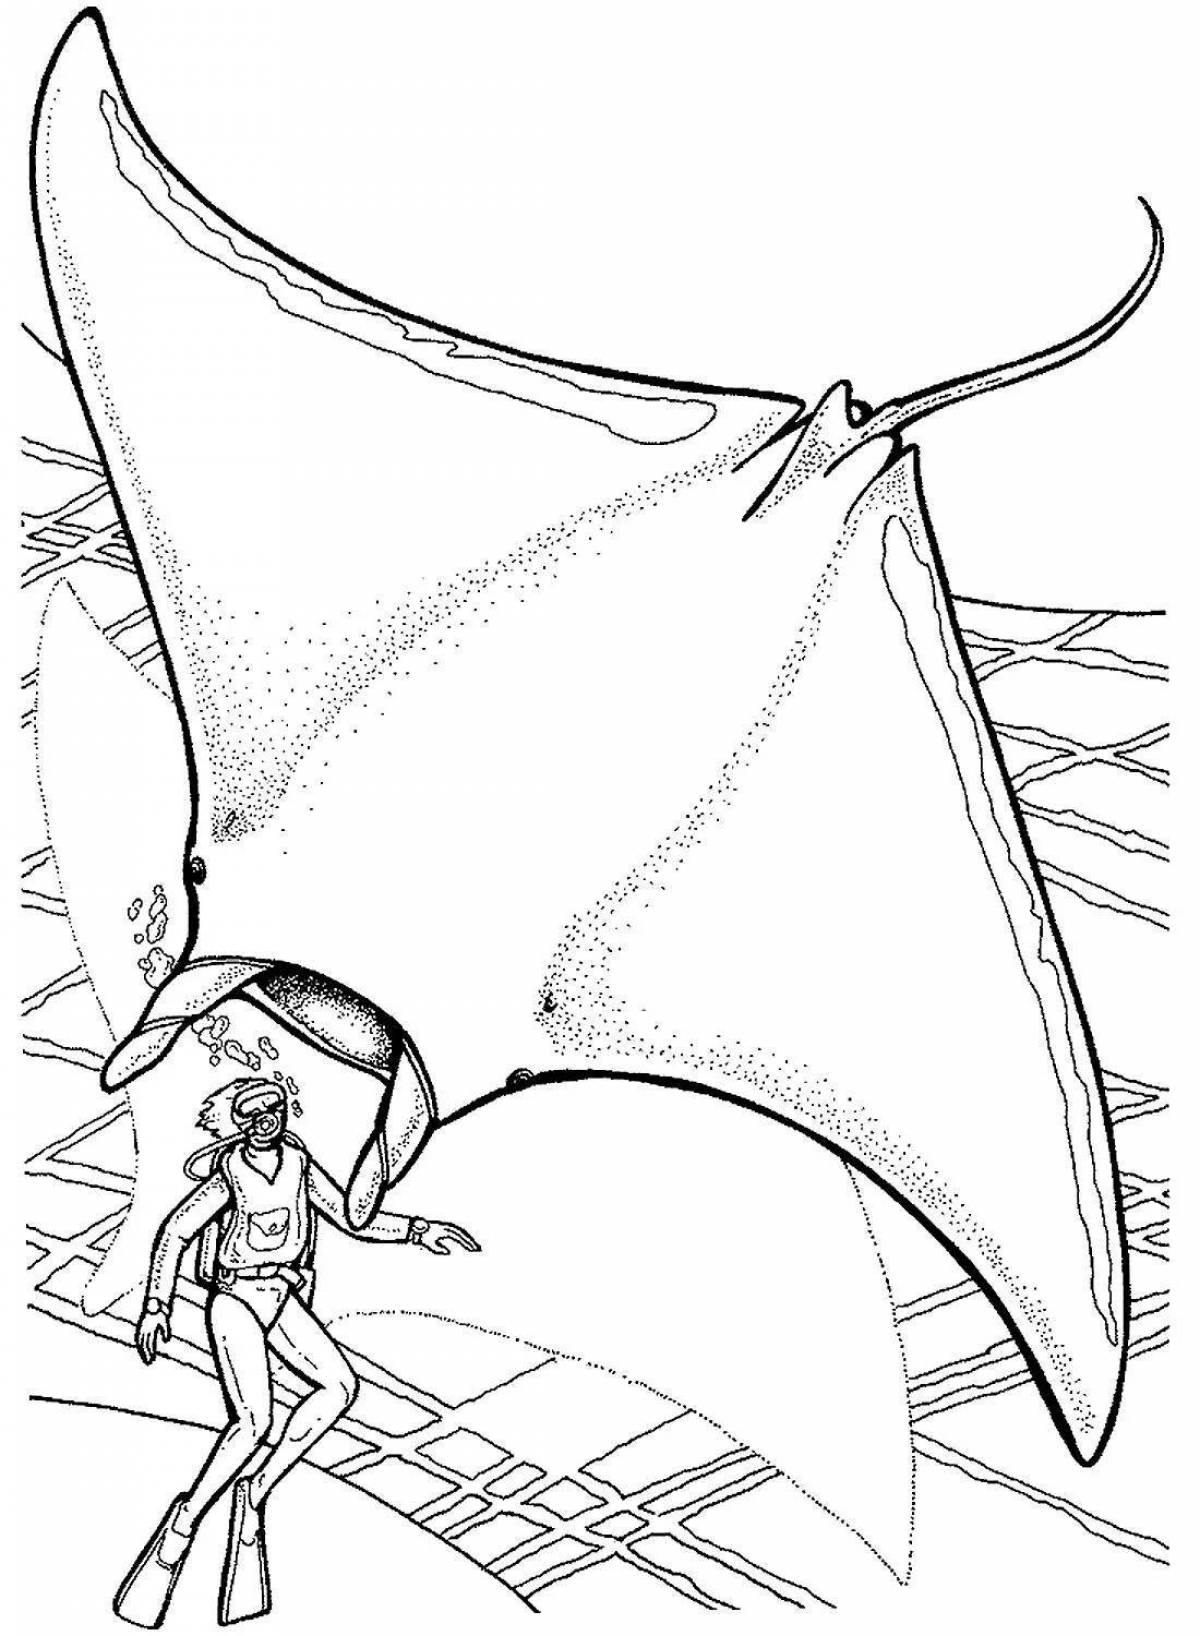 Majestic manta ray coloring page